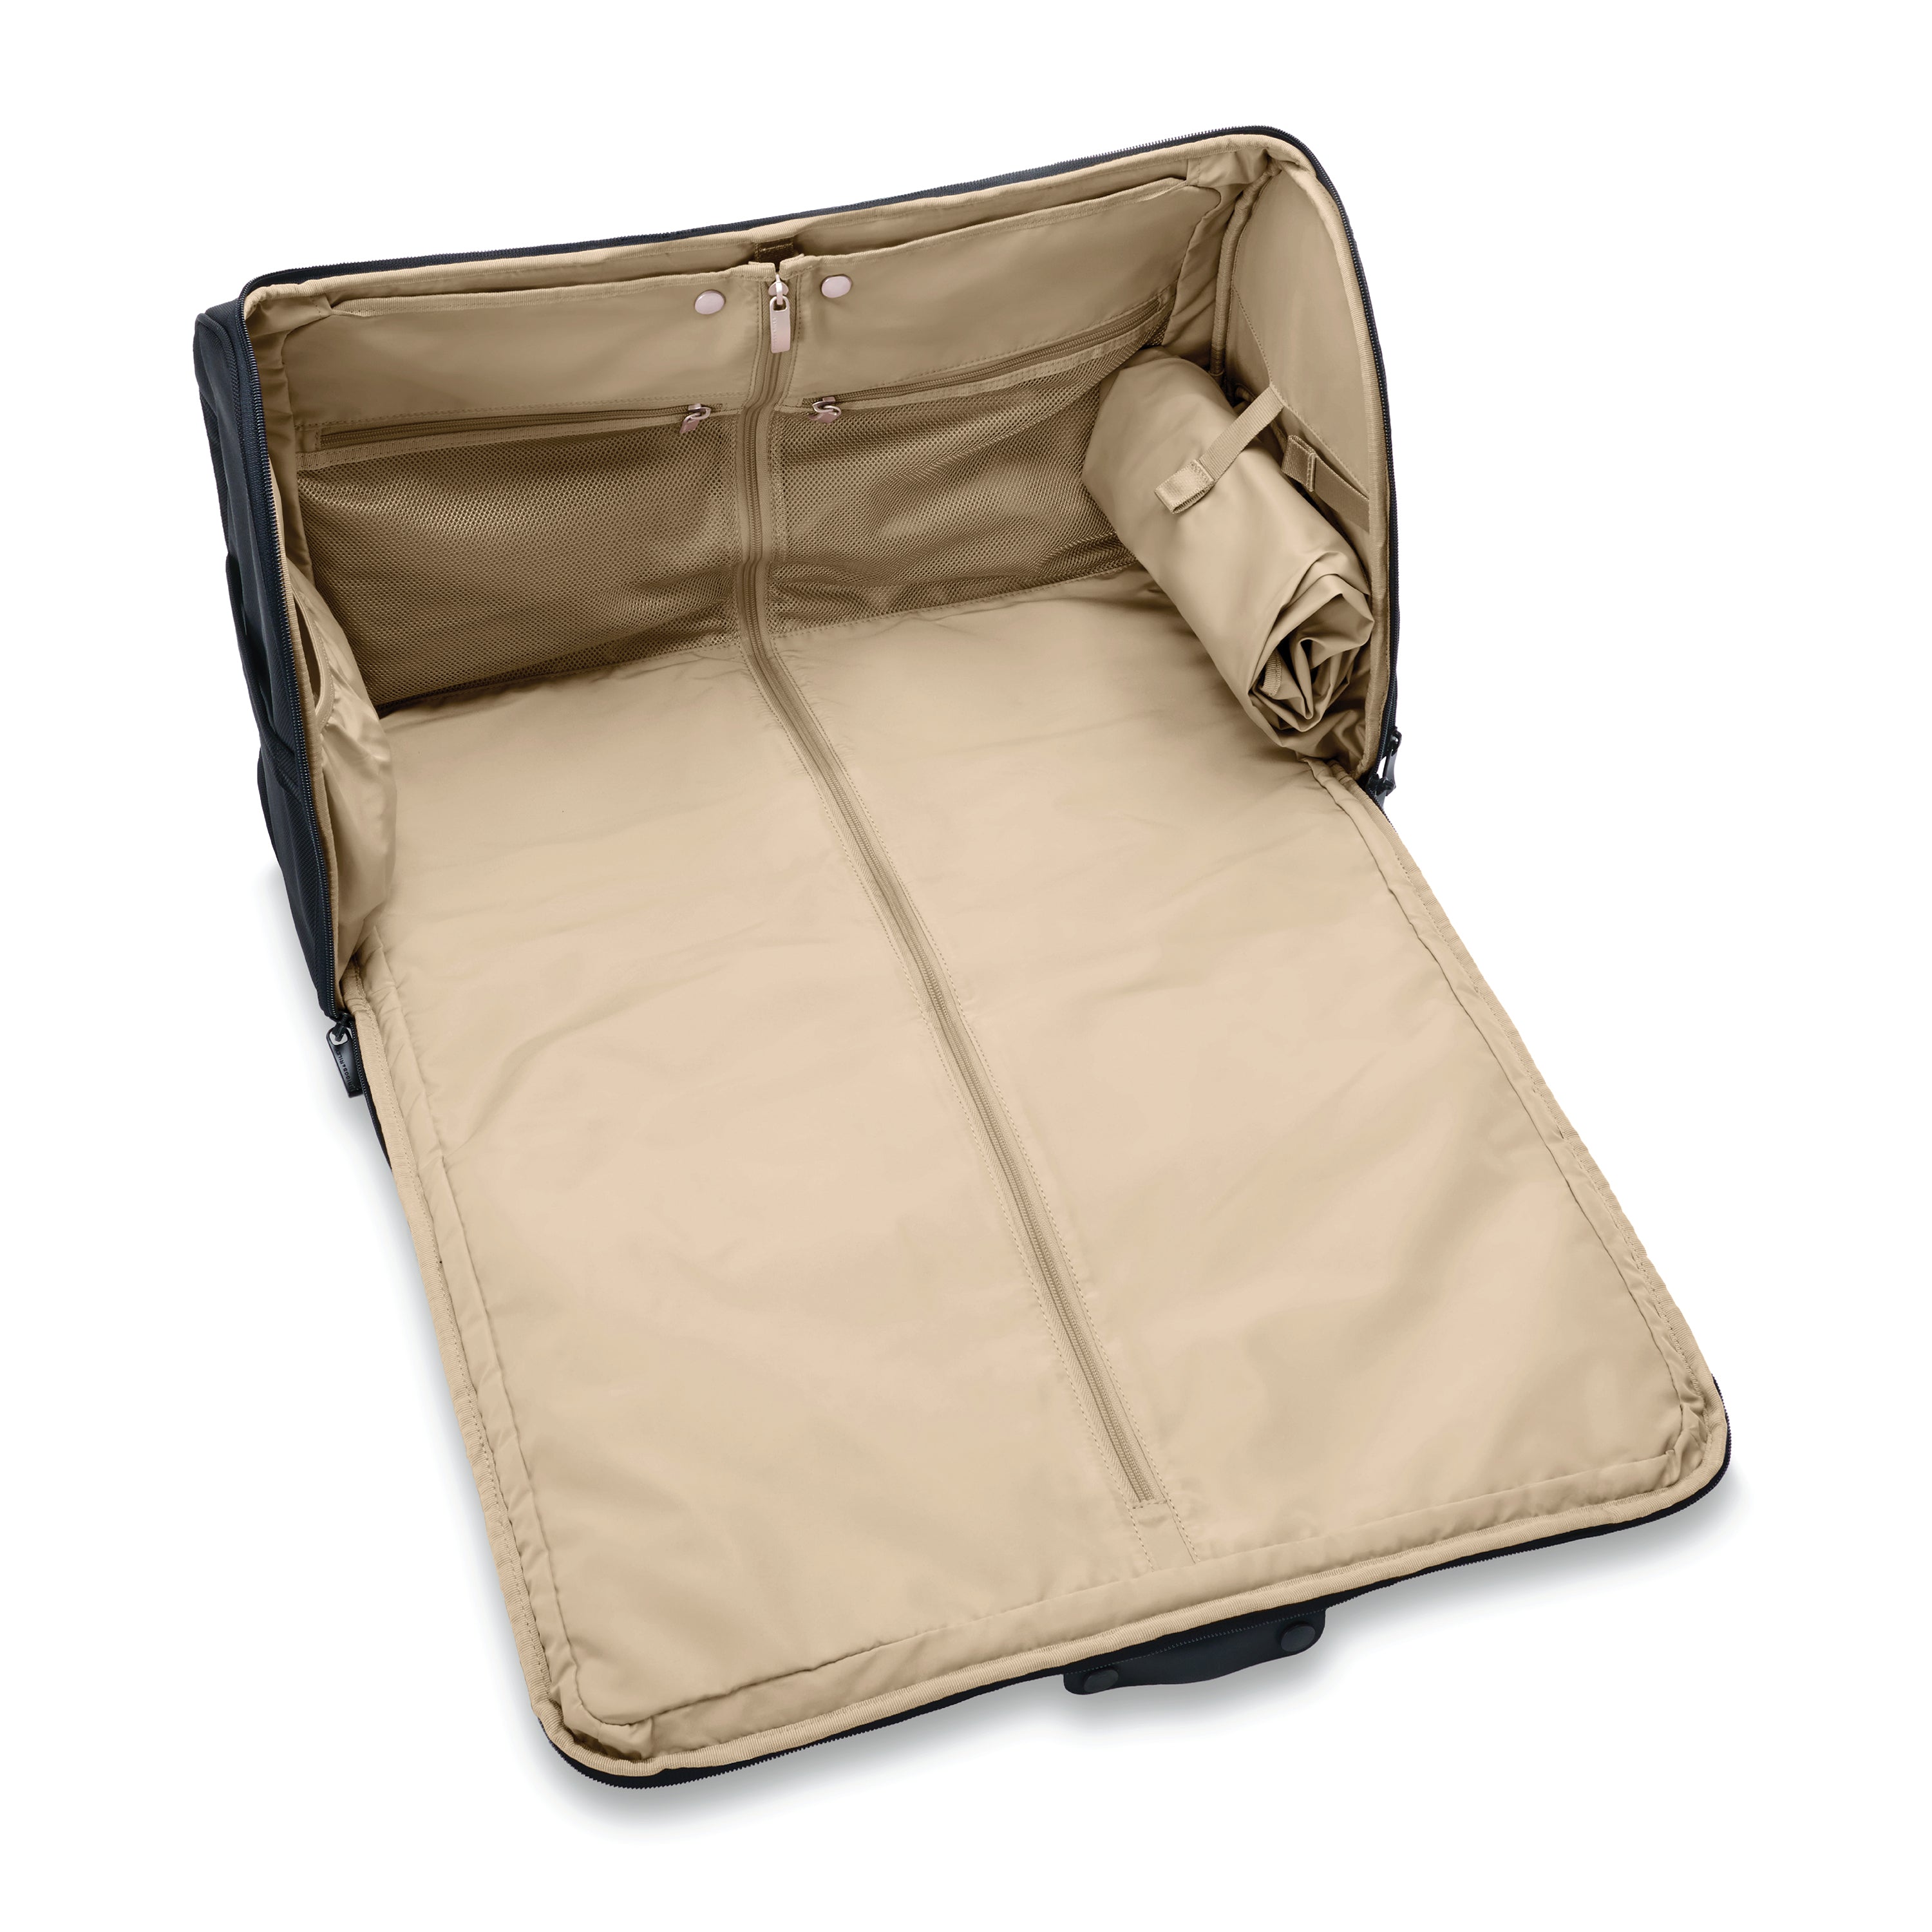 Multipurpose Fabric Durable Travel Hanging Suit Garment Bag with Pocket -  China Hanging Garment Bag and Suit Garment Bag price